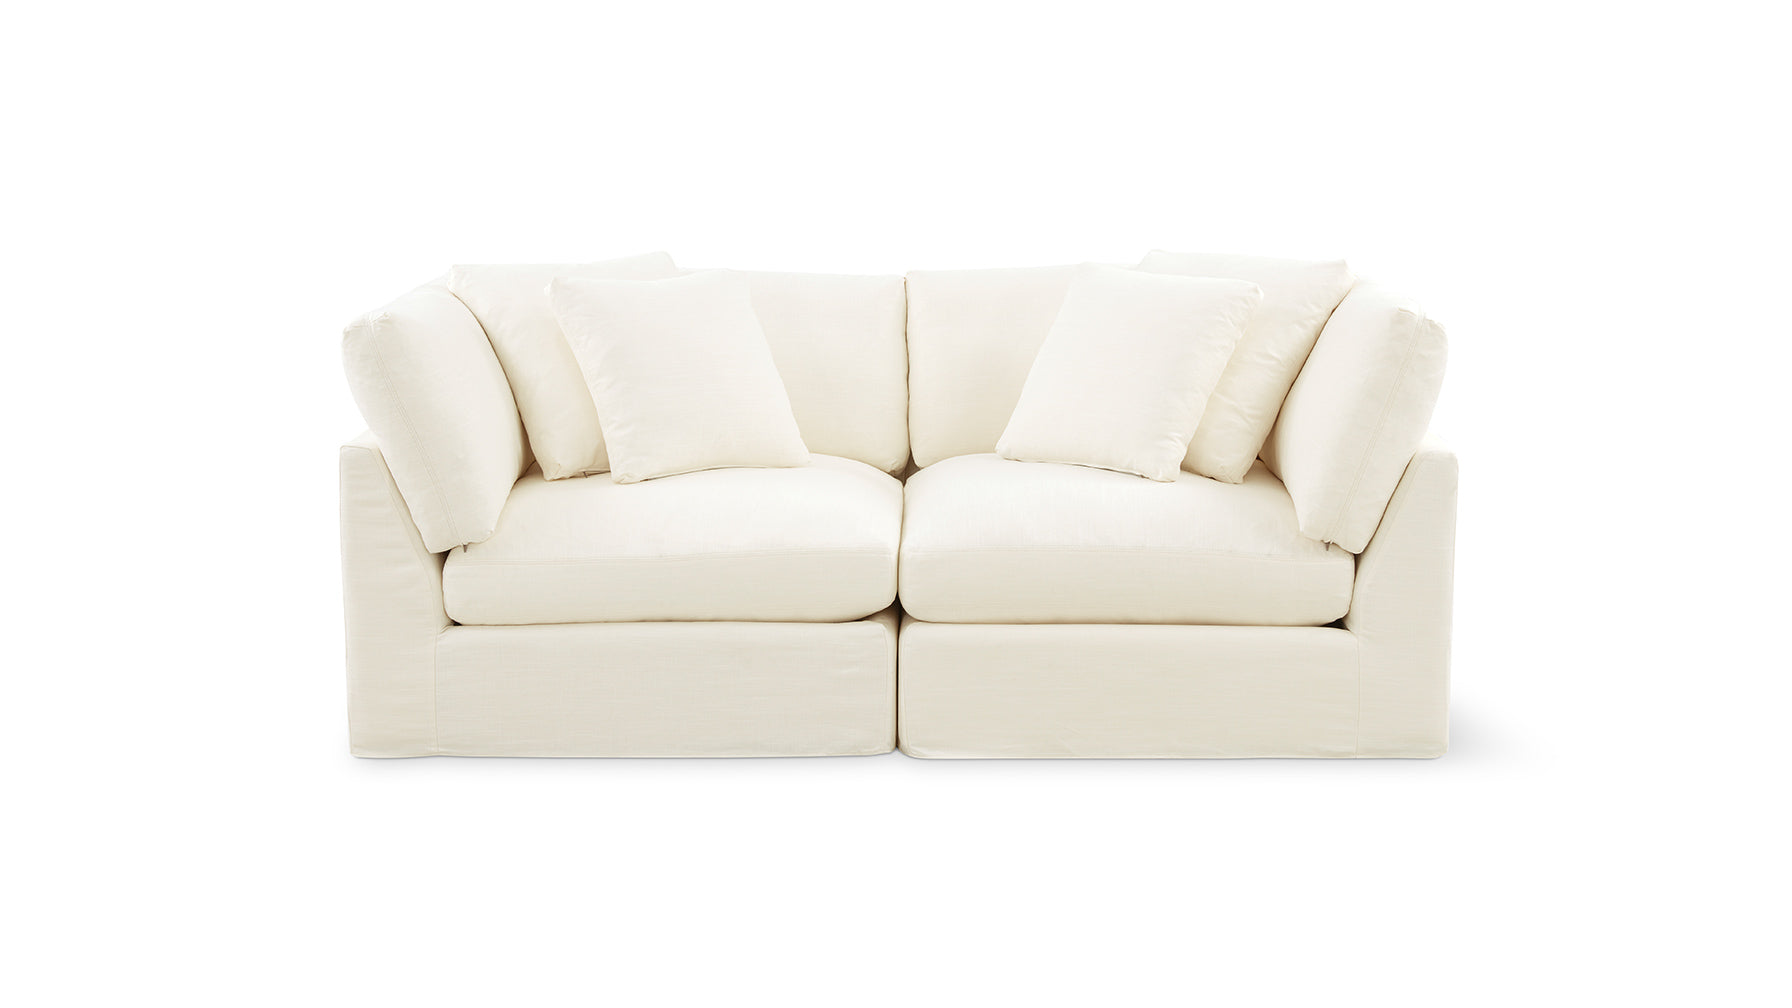 Get Together™ 2-Piece Modular Sofa, Large, Cream Linen - Image 1